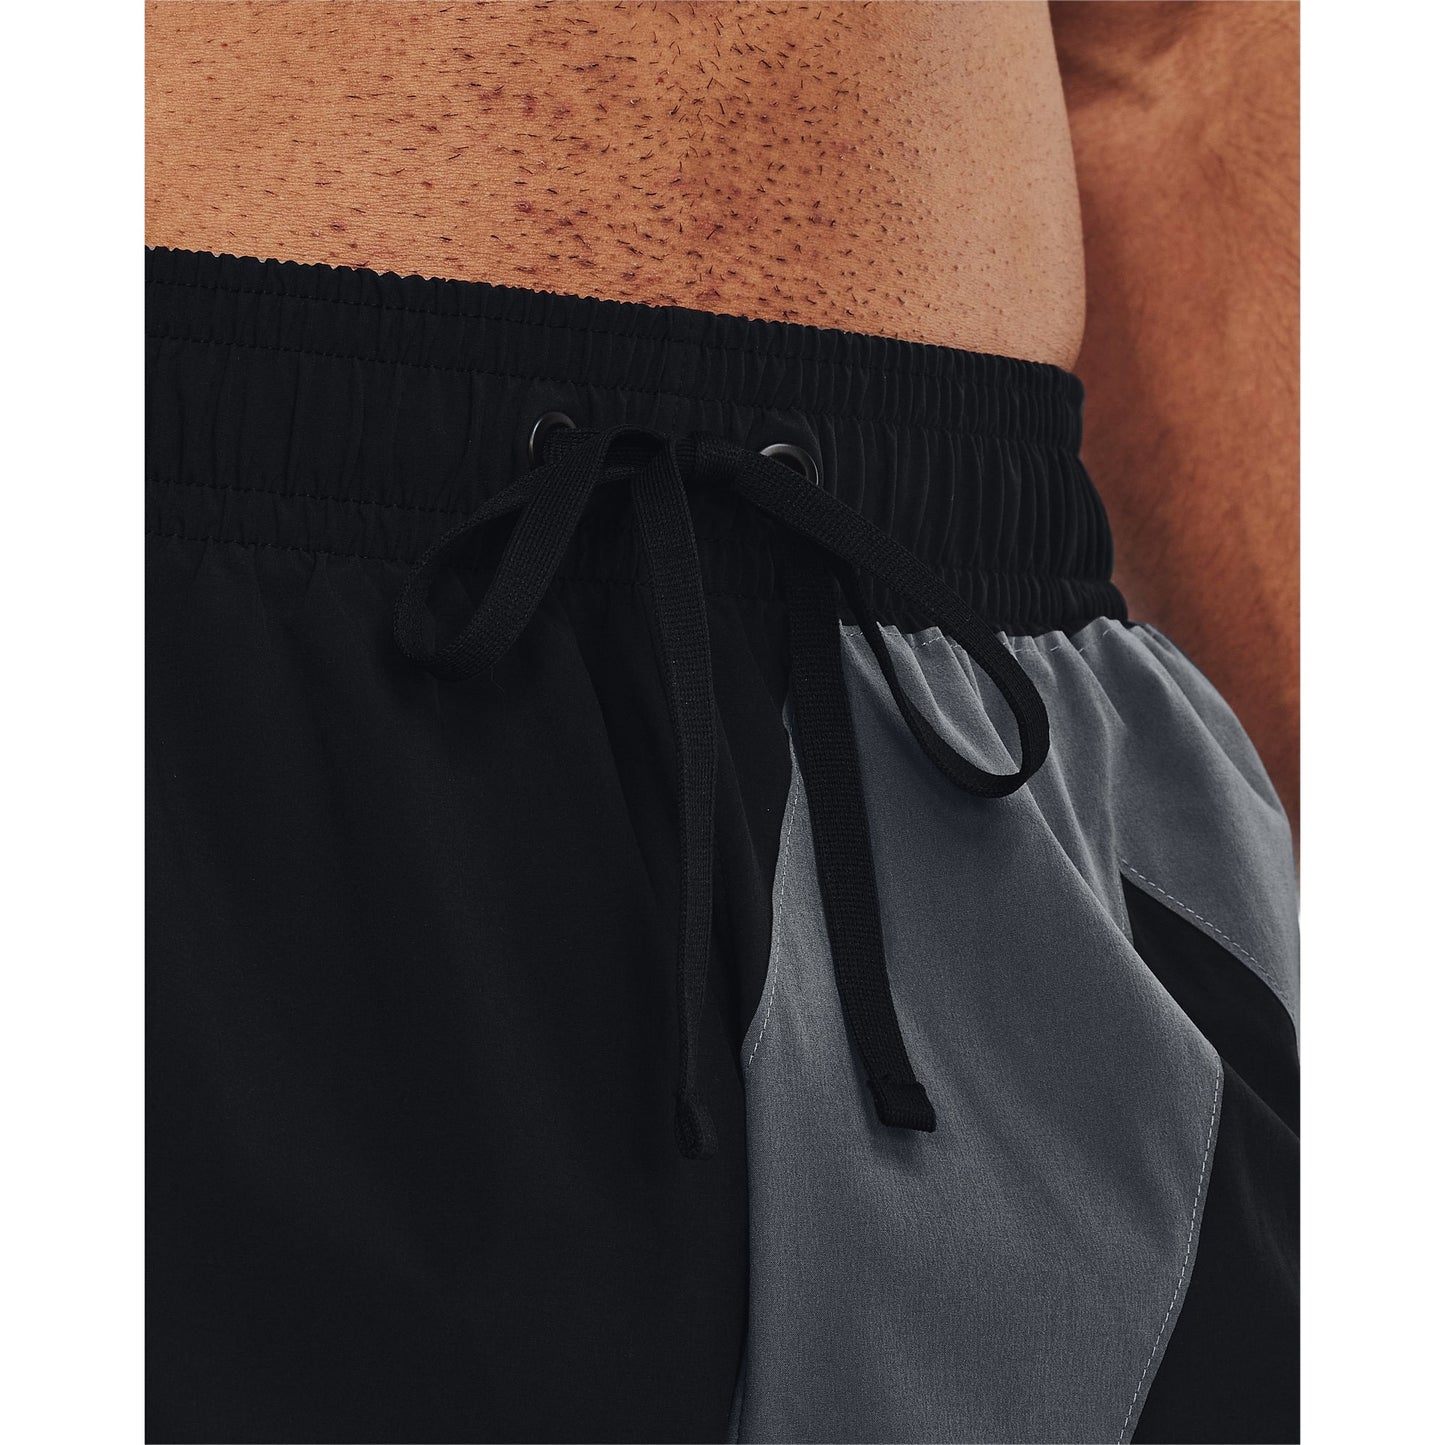 Under Armour Men's UA Baseline Woven Shorts Black / Pitch Gray